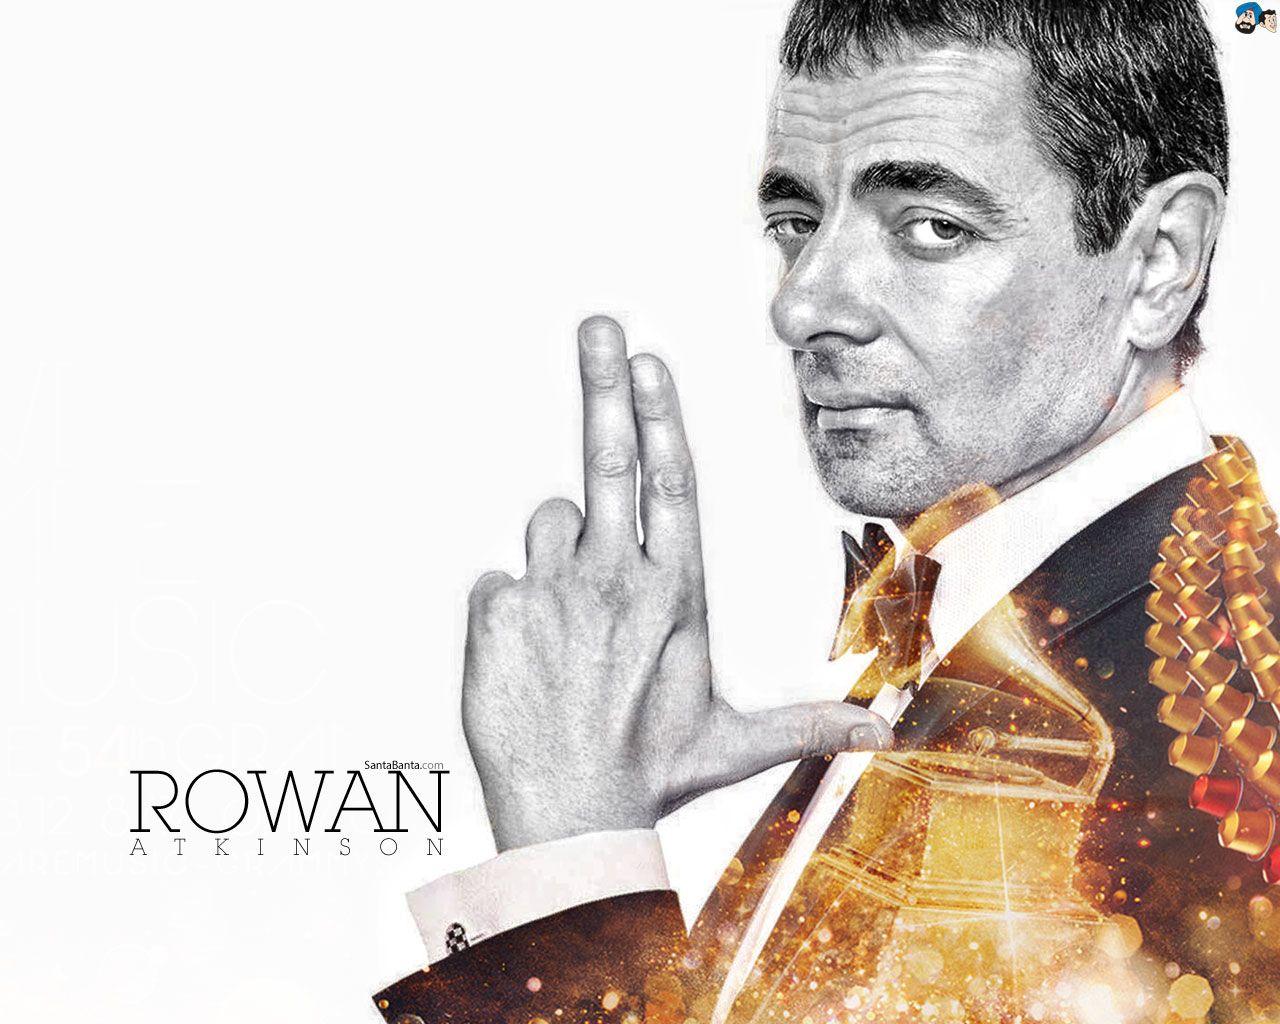 Movies Mr Bean Rowan Atkinson Wallpaper - Resolution:1920x1080 - ID:584024  - wallha.com